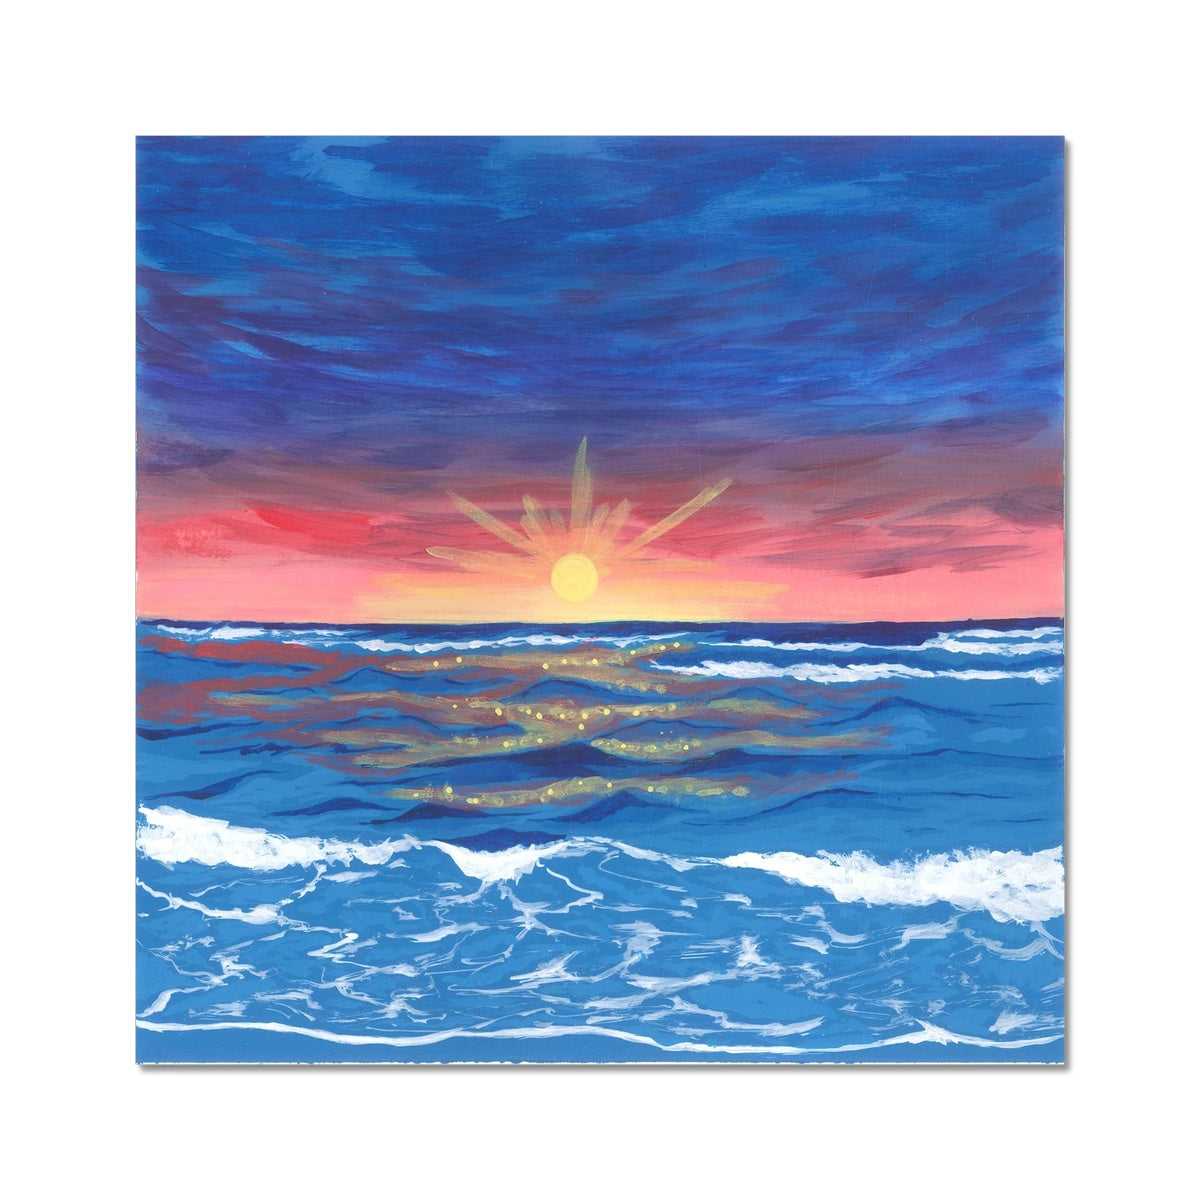 Hooker’s Sea Lions - Sunset Majesty over the Ocean's Horizon Fine Art Print - nature soundscape art - earth.fm